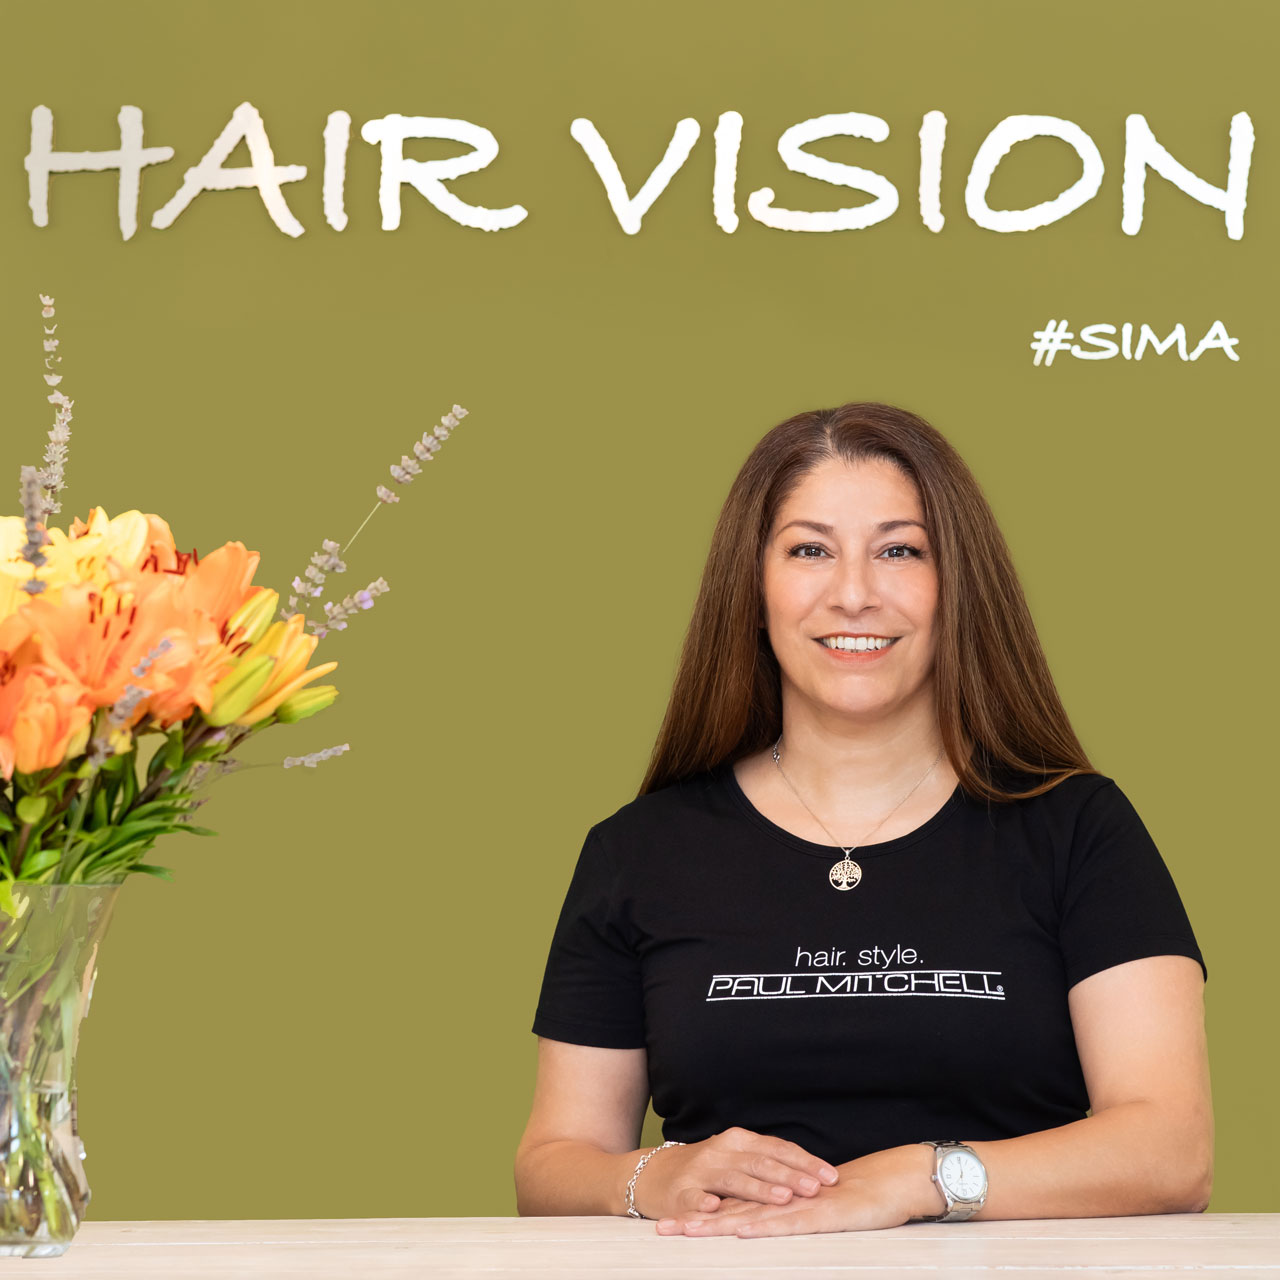 Hair Vision Ihr Team